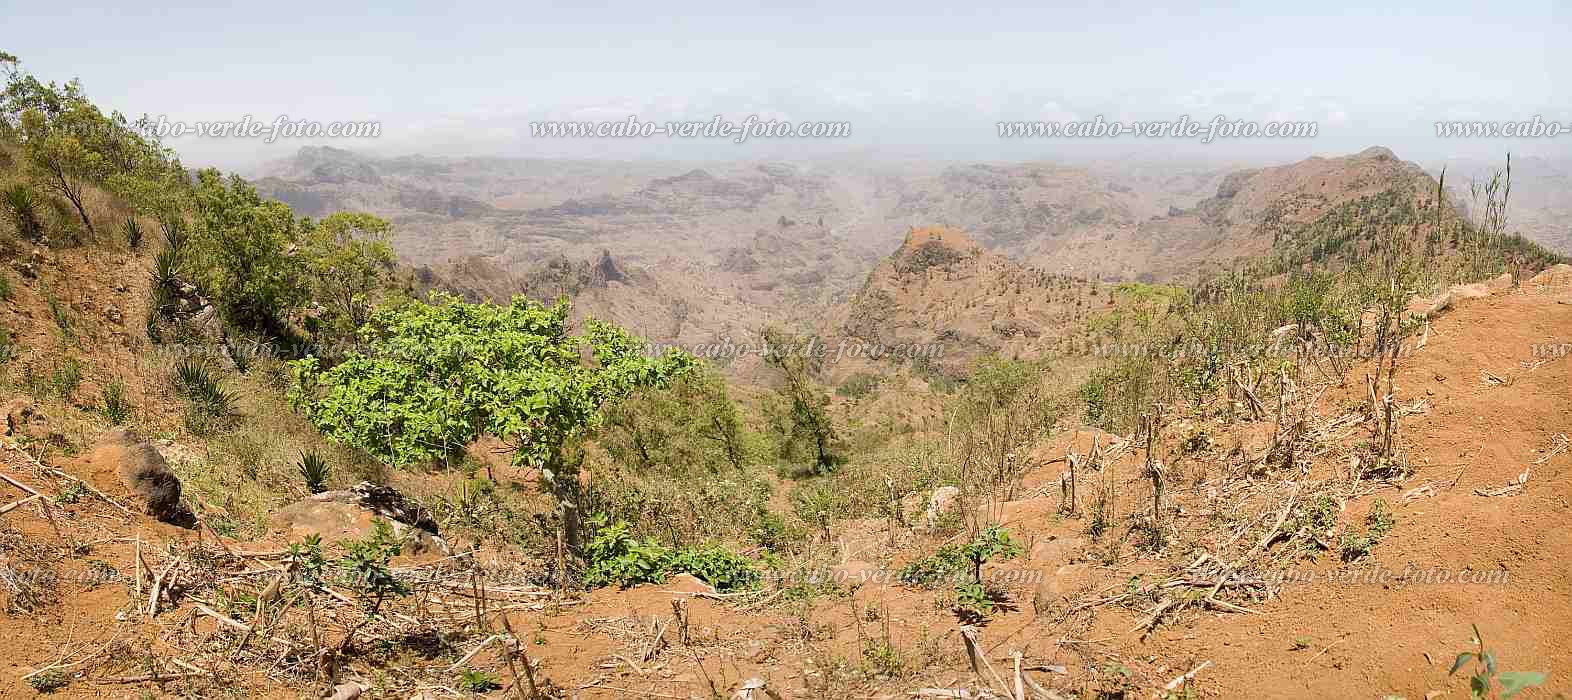 Insel: Santiago  Wanderweg:  Ort:  Motiv: Panorama Motivgruppe: Landscape Agriculture © Florian Drmer www.Cabo-Verde-Foto.com